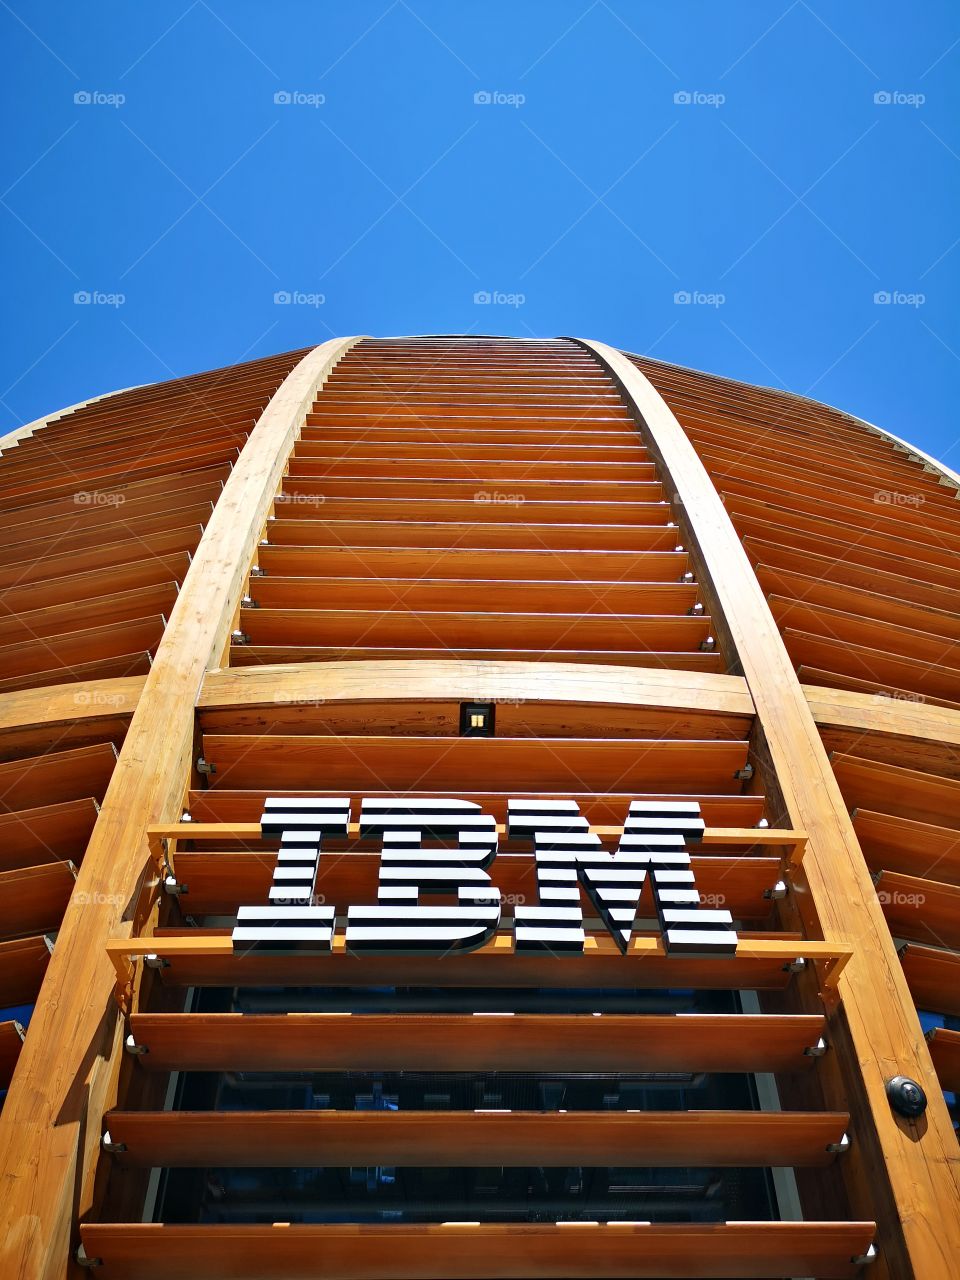 IBM Studios Milano